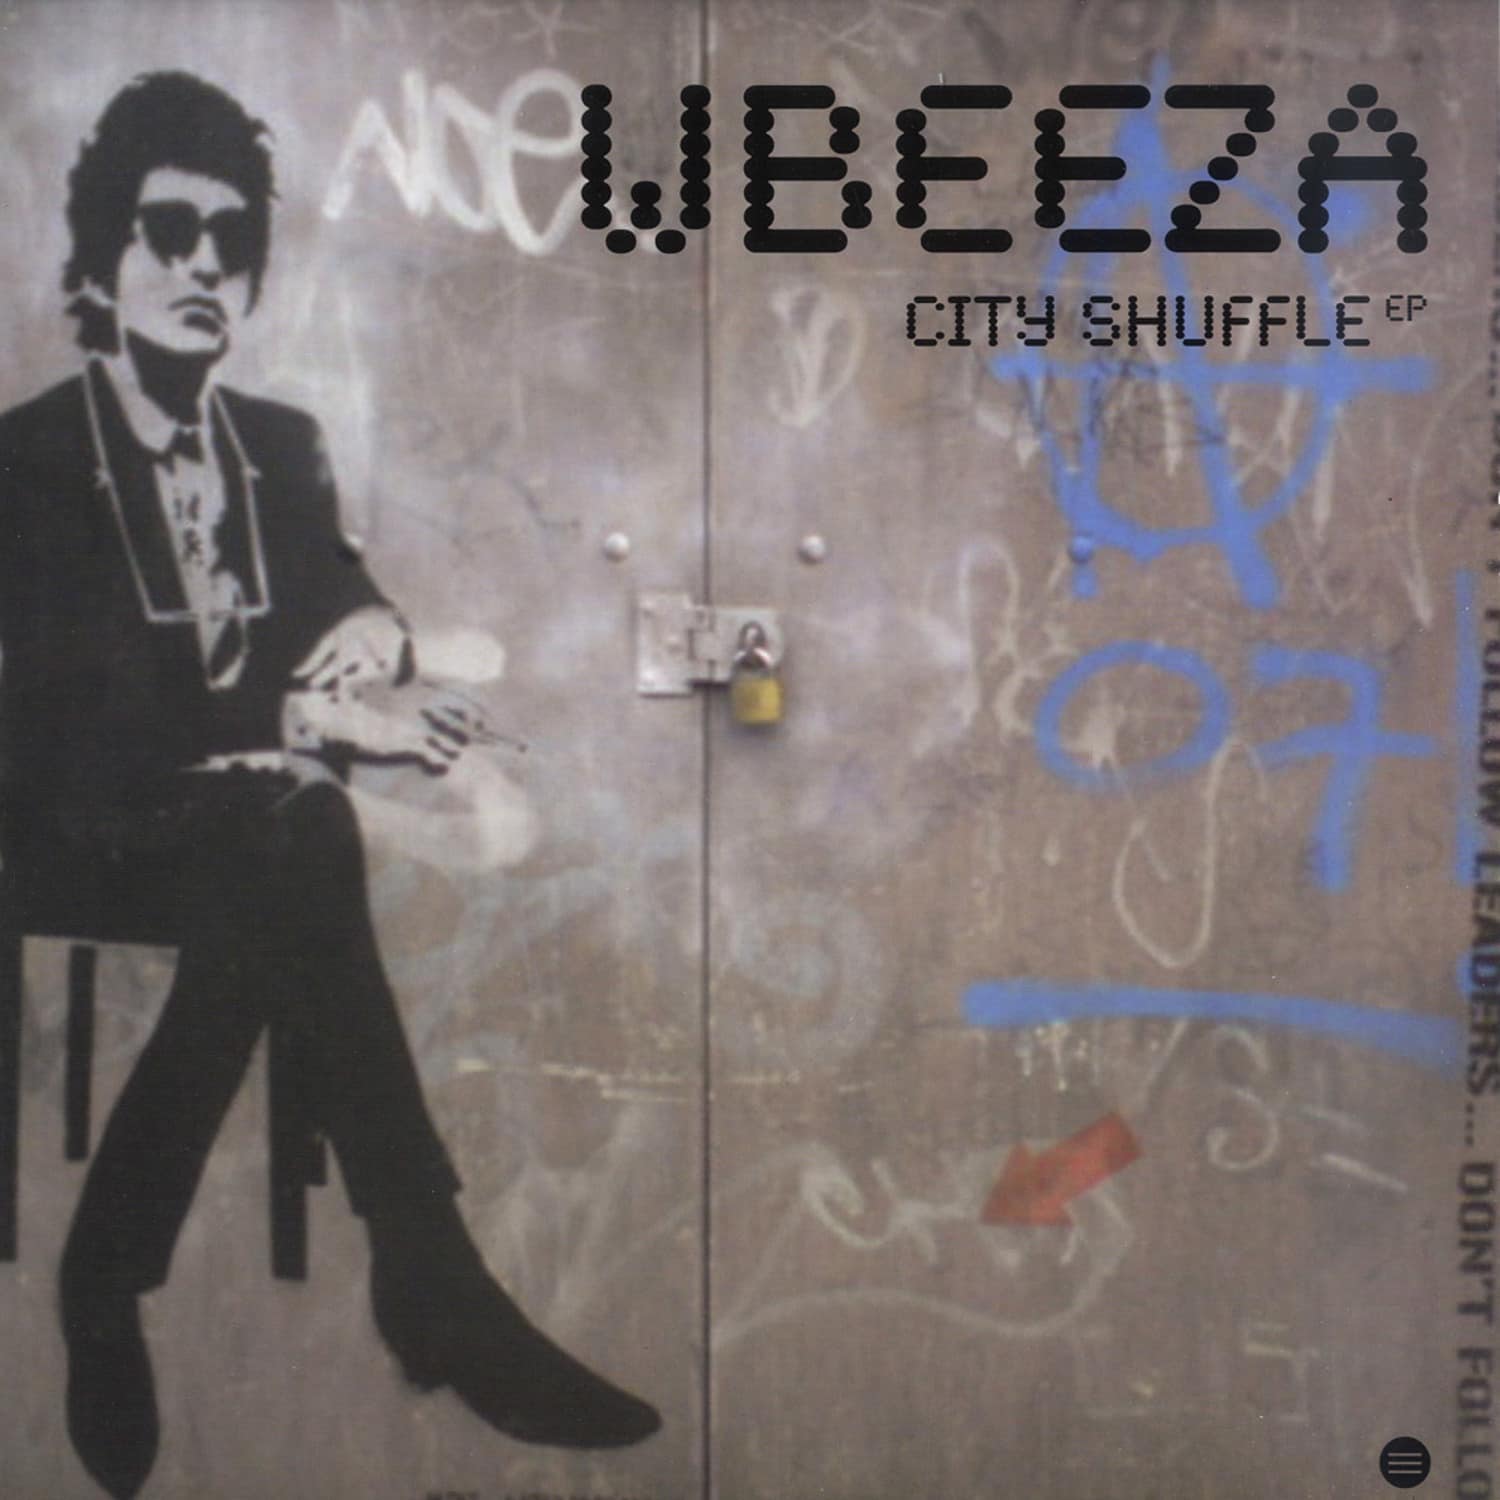 Wbeeza - CITY SHUFFLE EP 